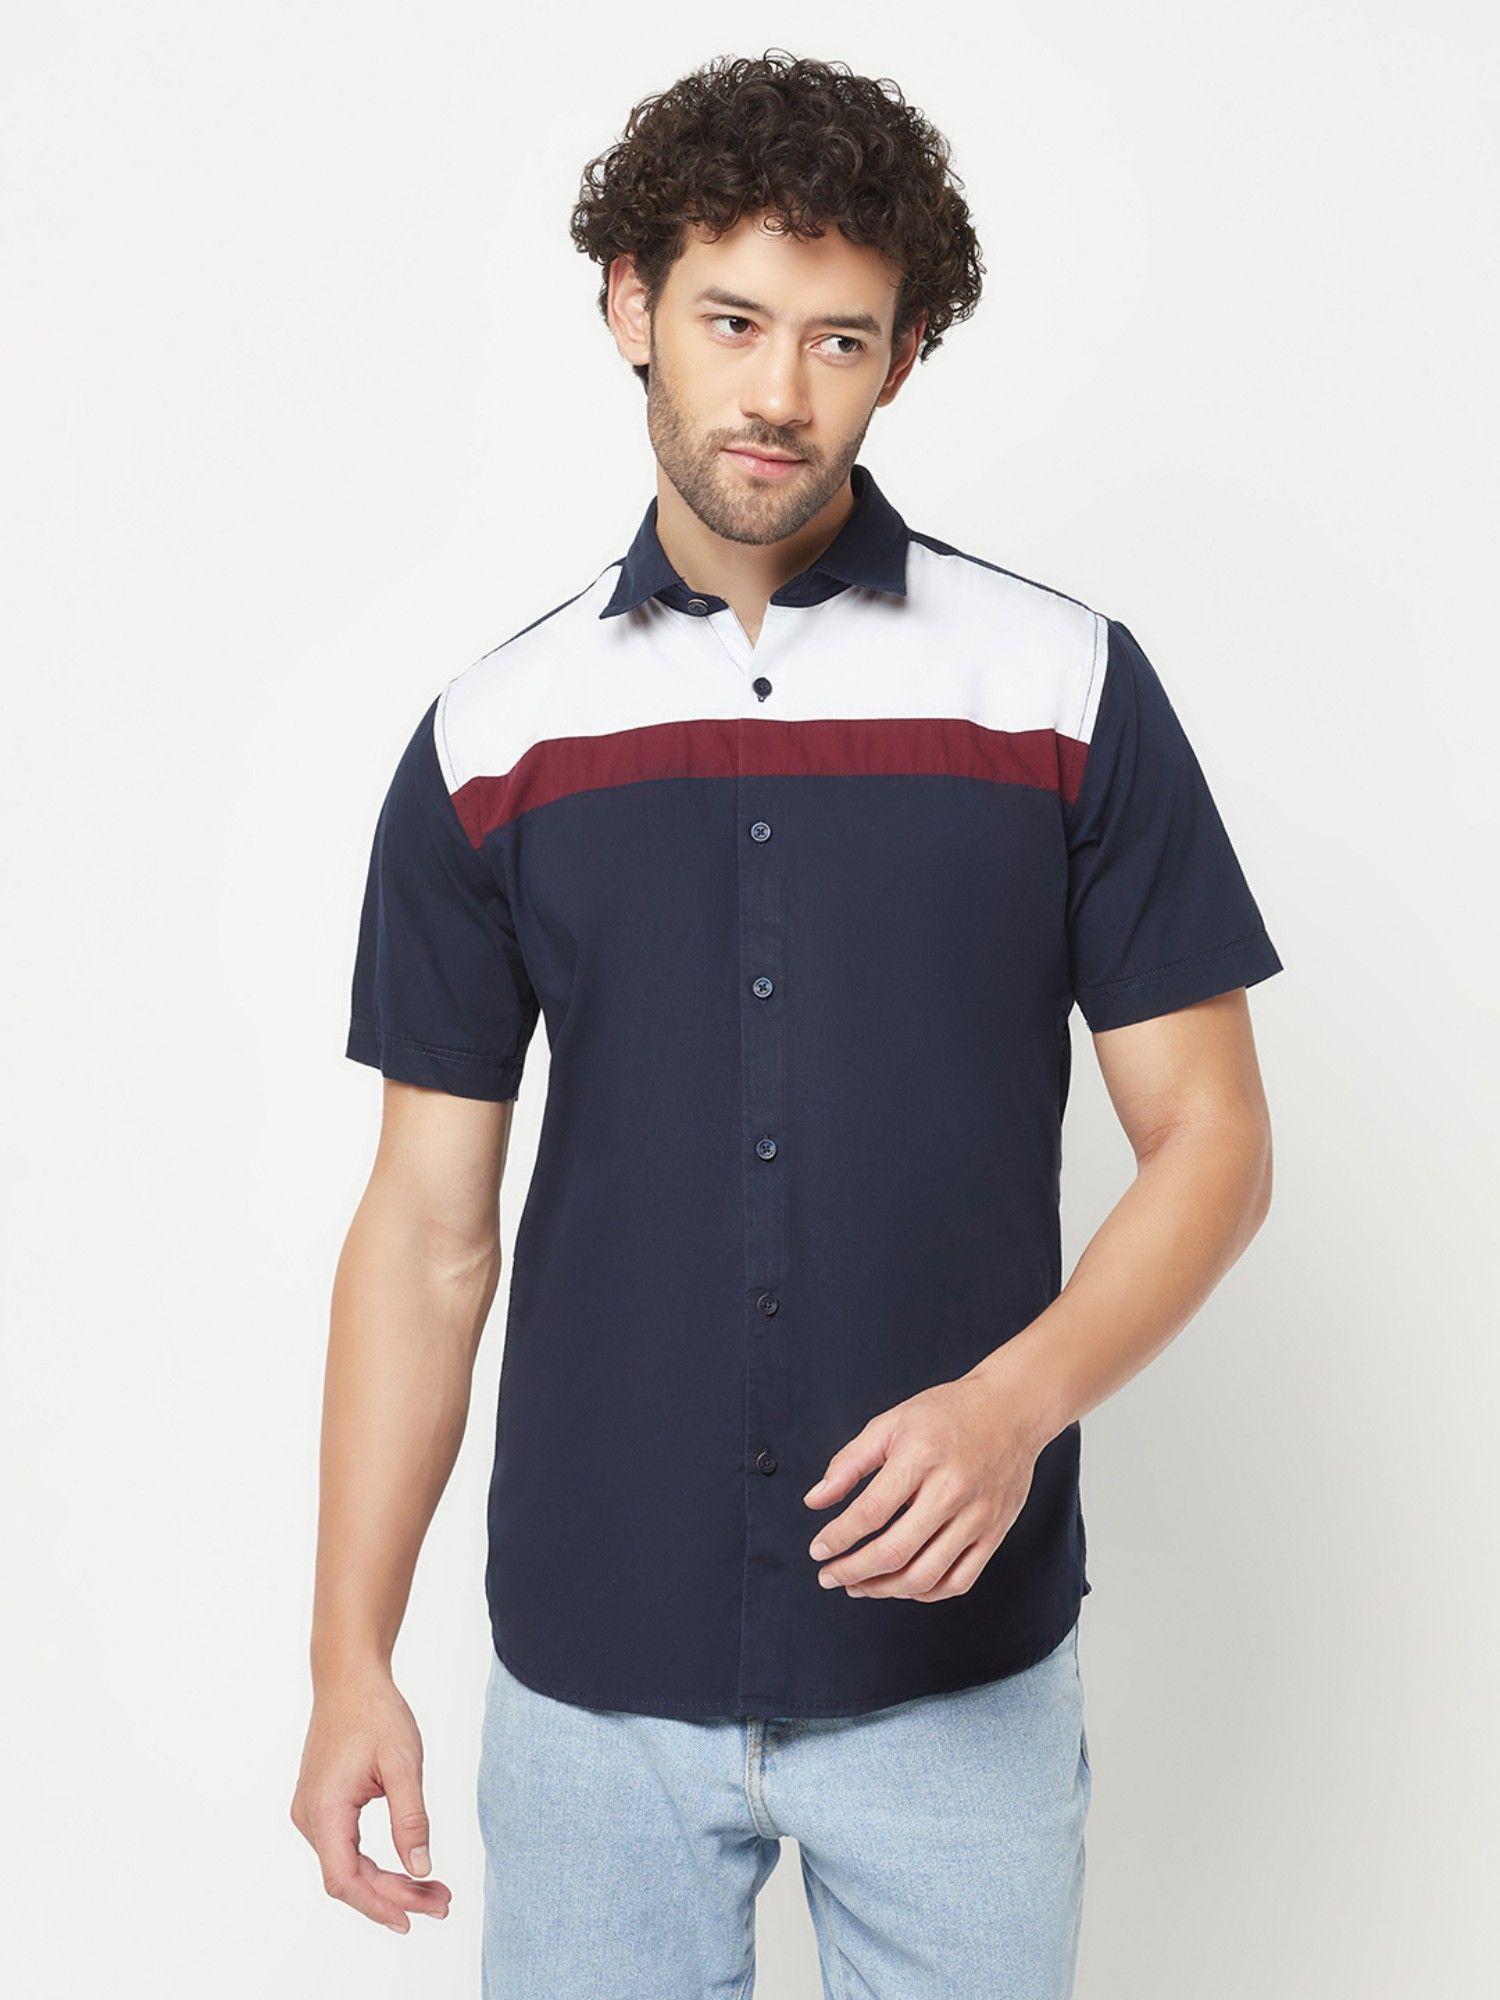 mens-navy-blue-colorblock-shirt